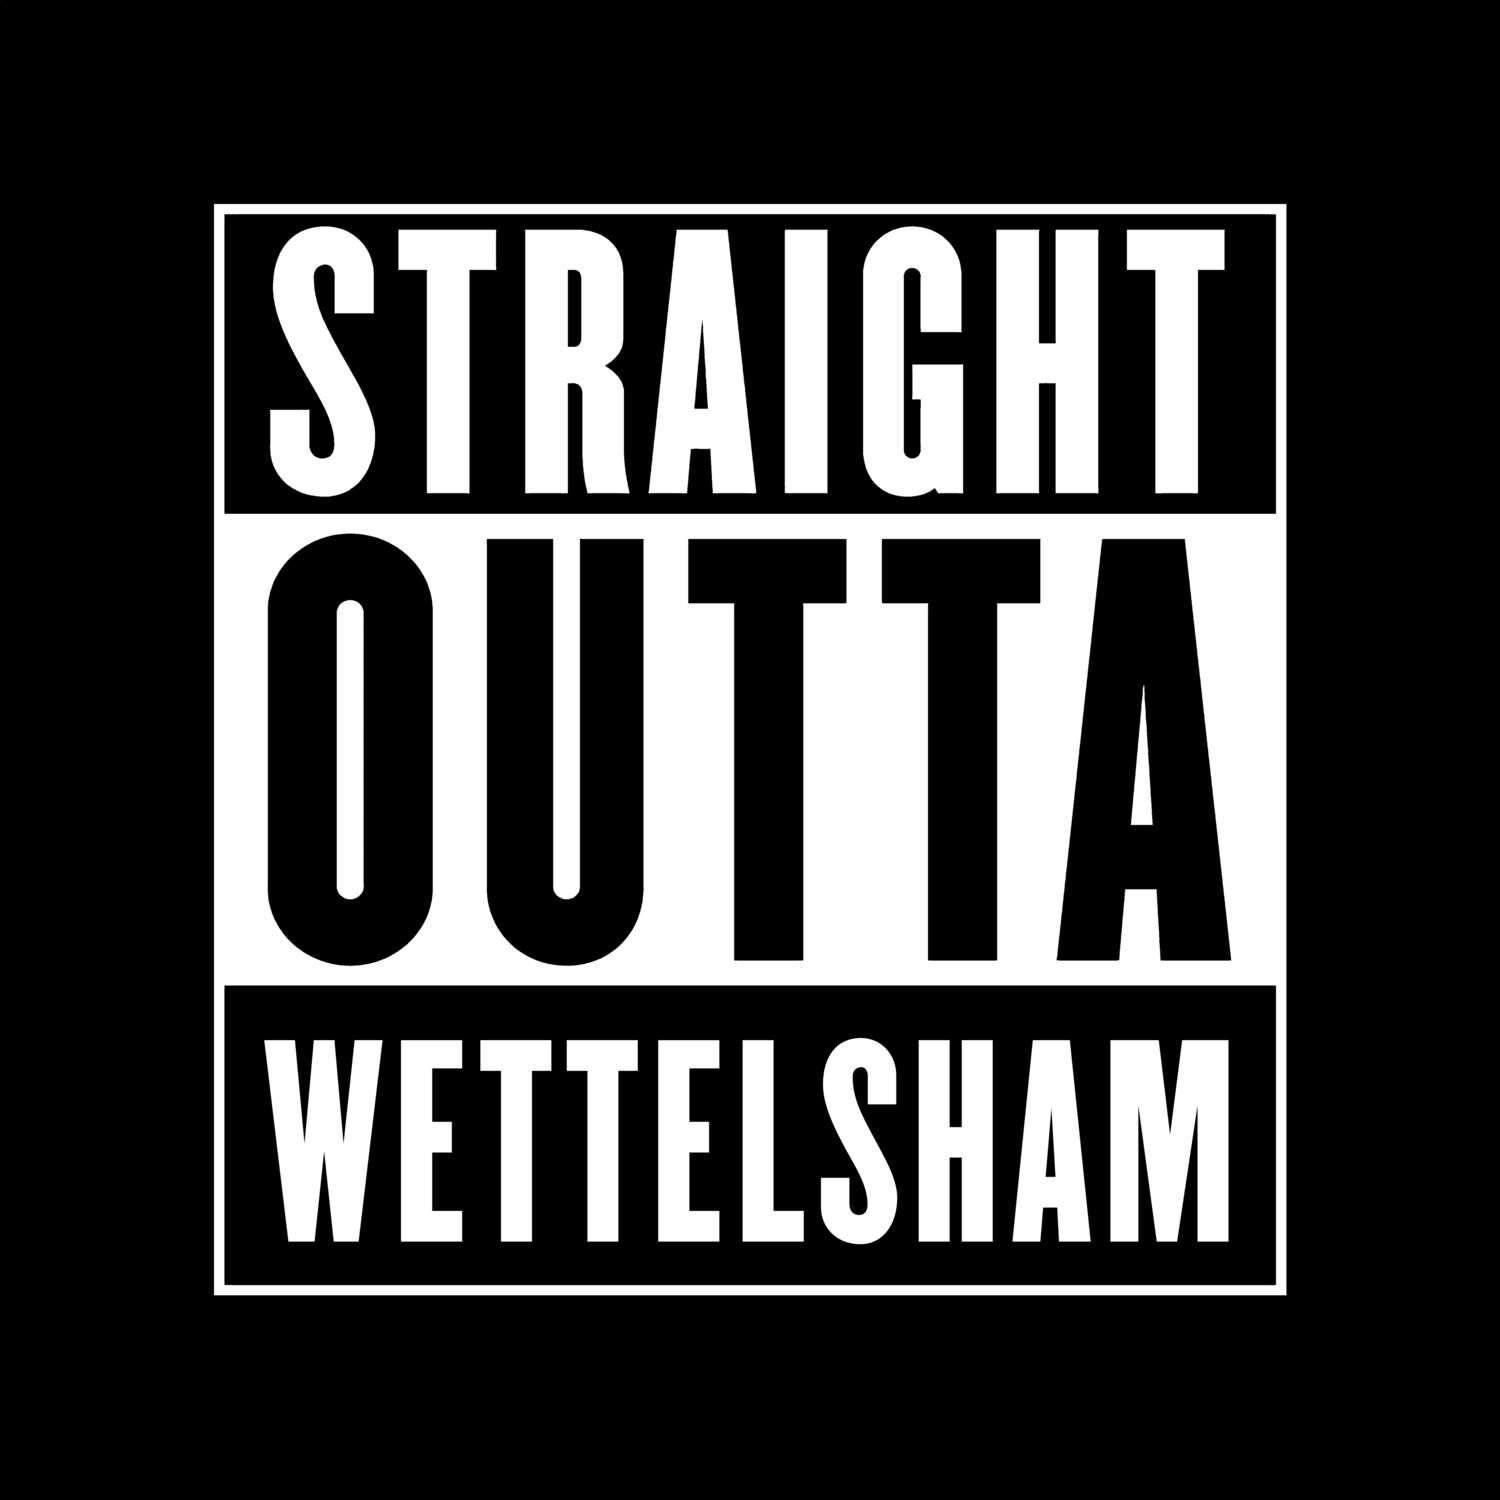 Wettelsham T-Shirt »Straight Outta«